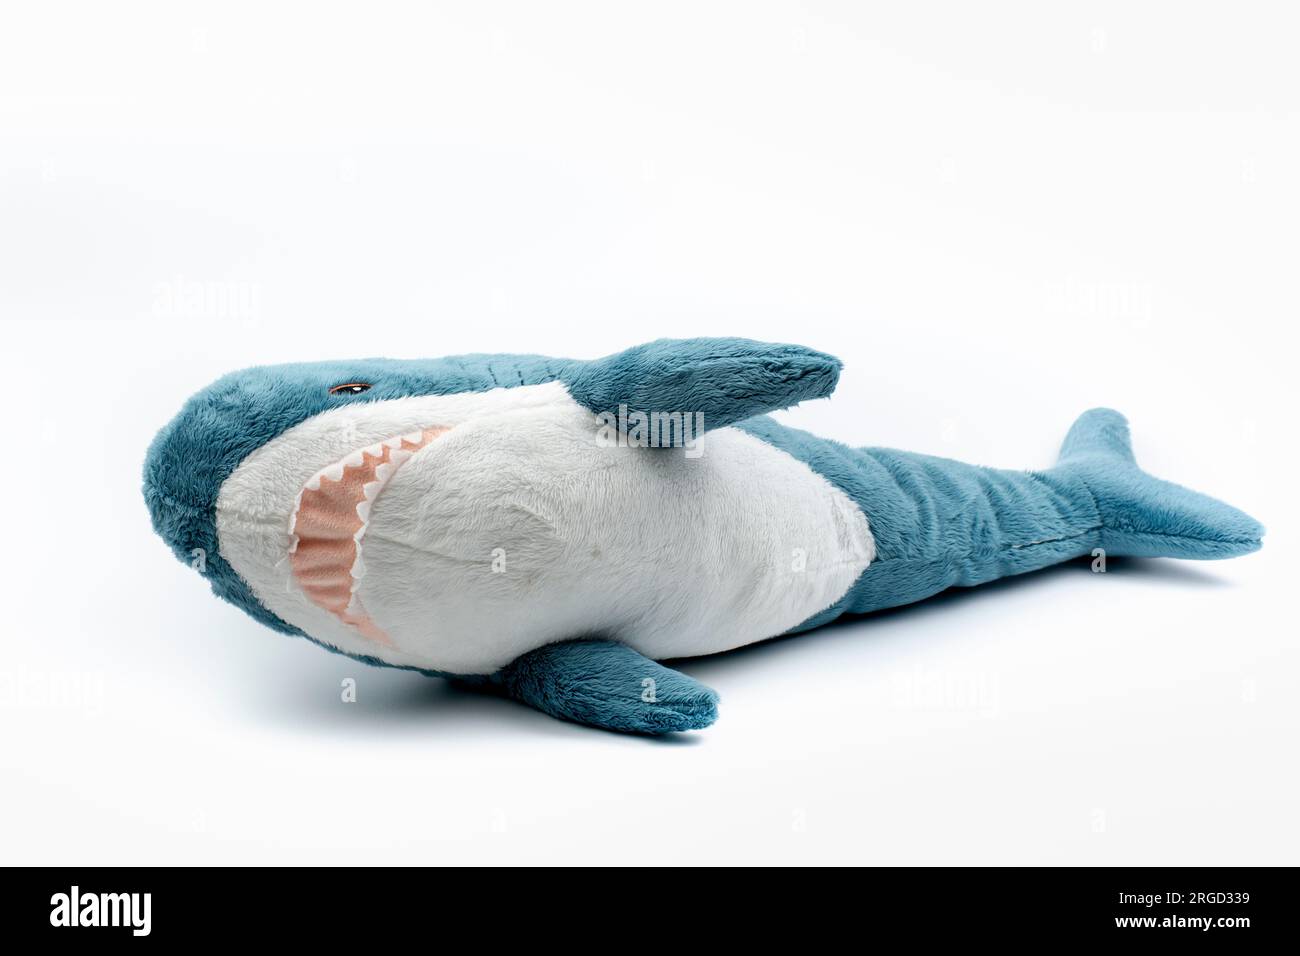 Nova Bana, Slovakia - August, 7, 2023 : Blahaj, Ikea plush toy made of recycled polyester. Stuffed Animal Toy Blue shark on white background. Stock Photo